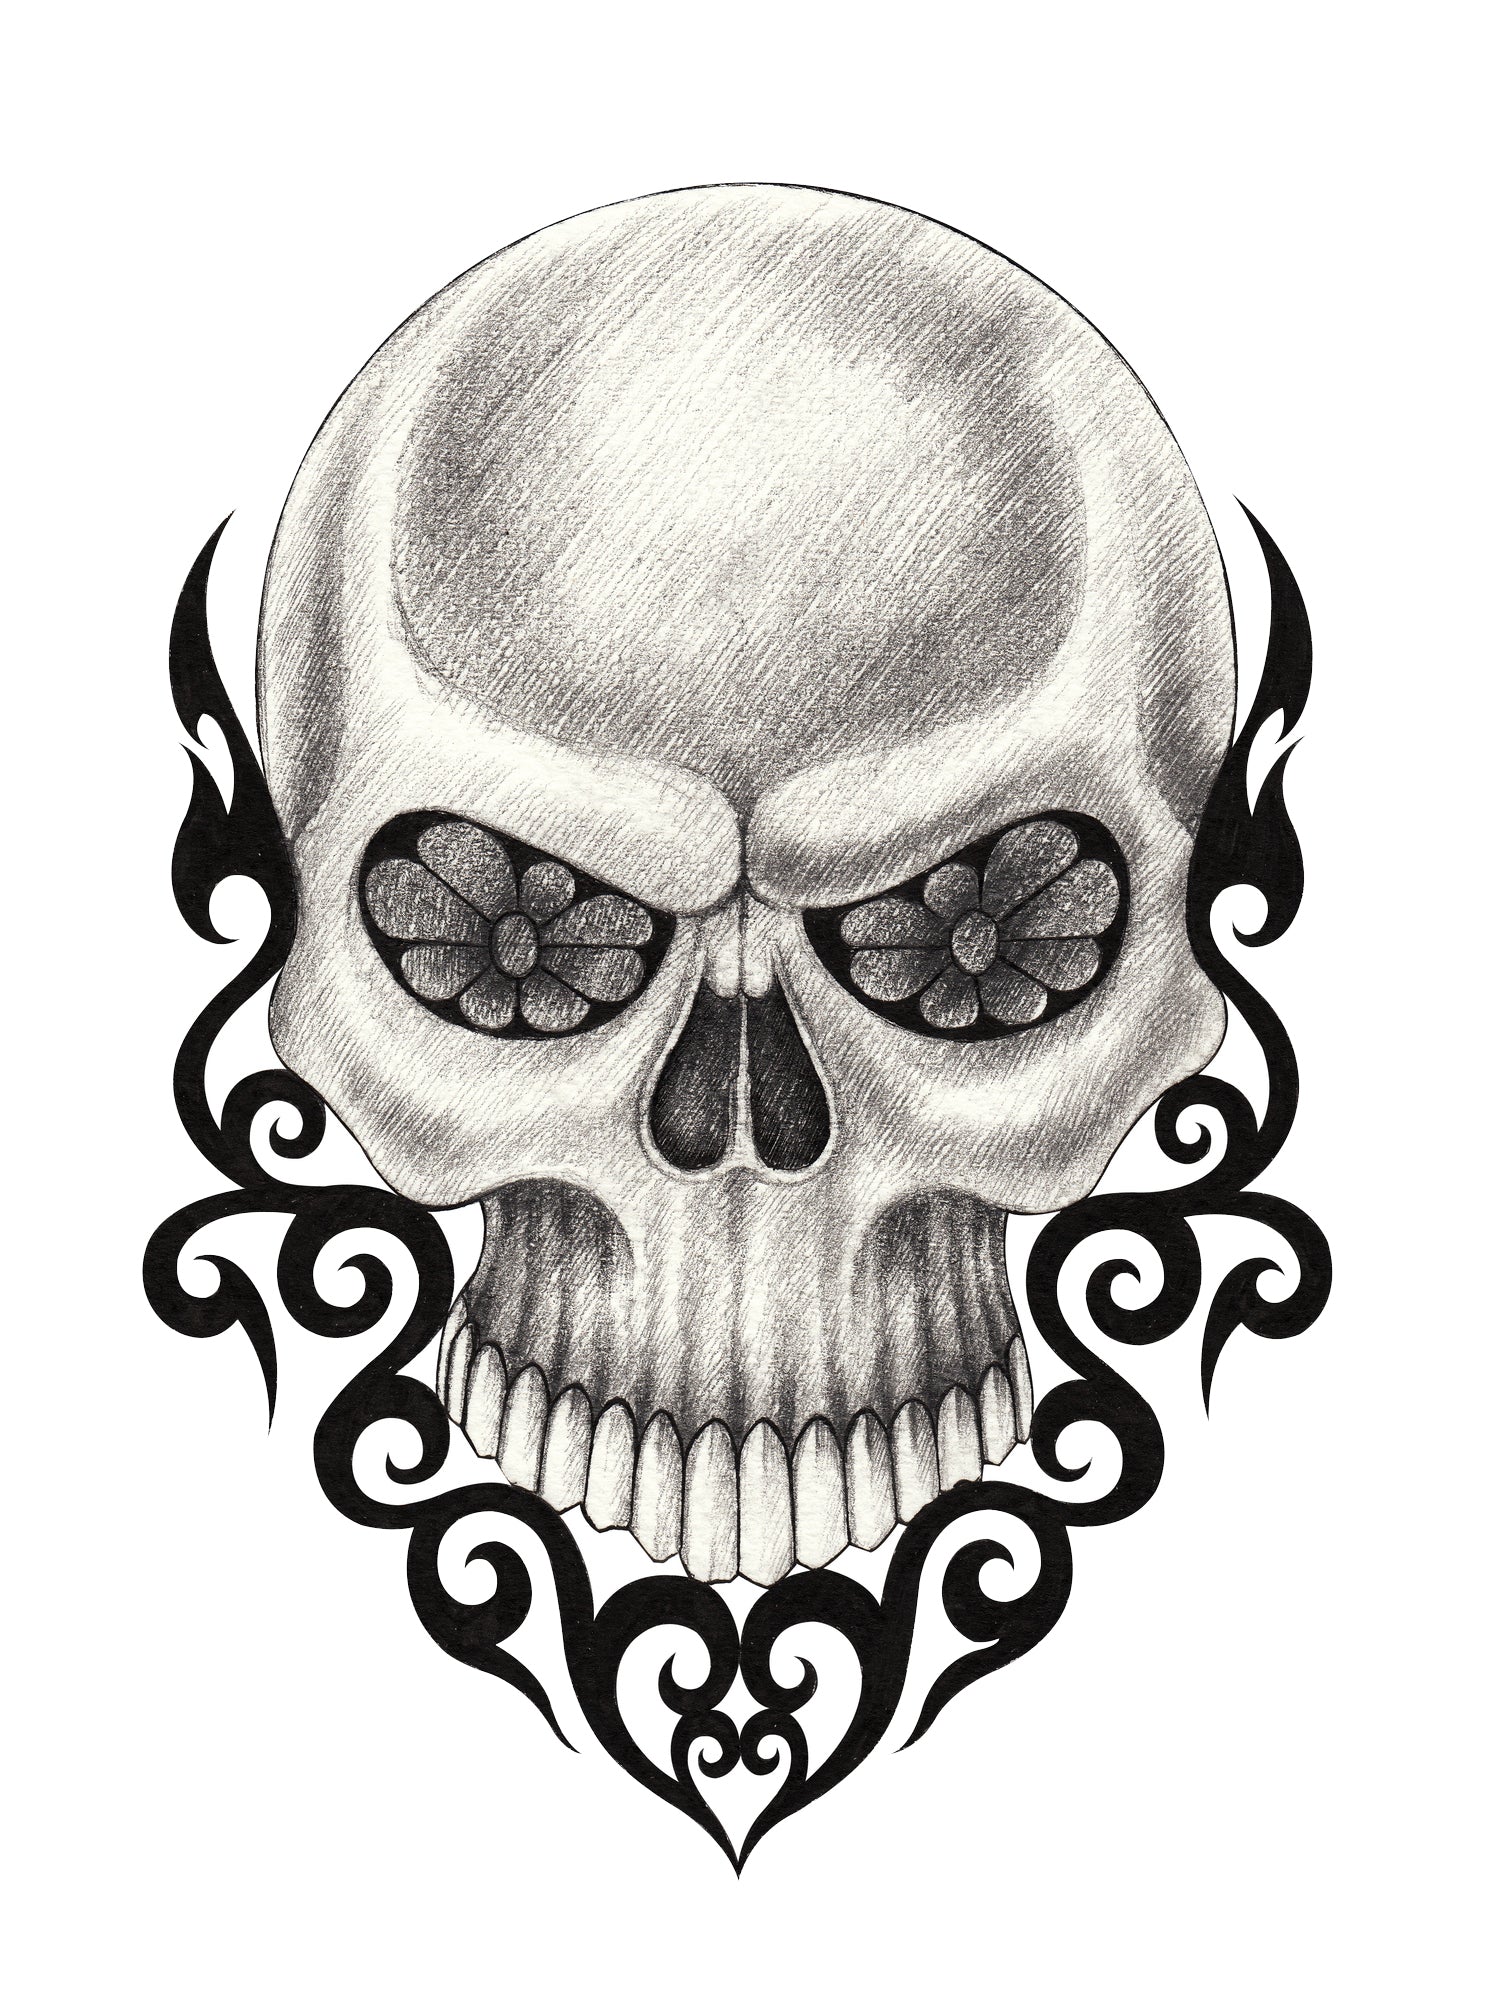 Pencil Sketch Skull with Flower Eye Sockets Vinyl Decal Sticker